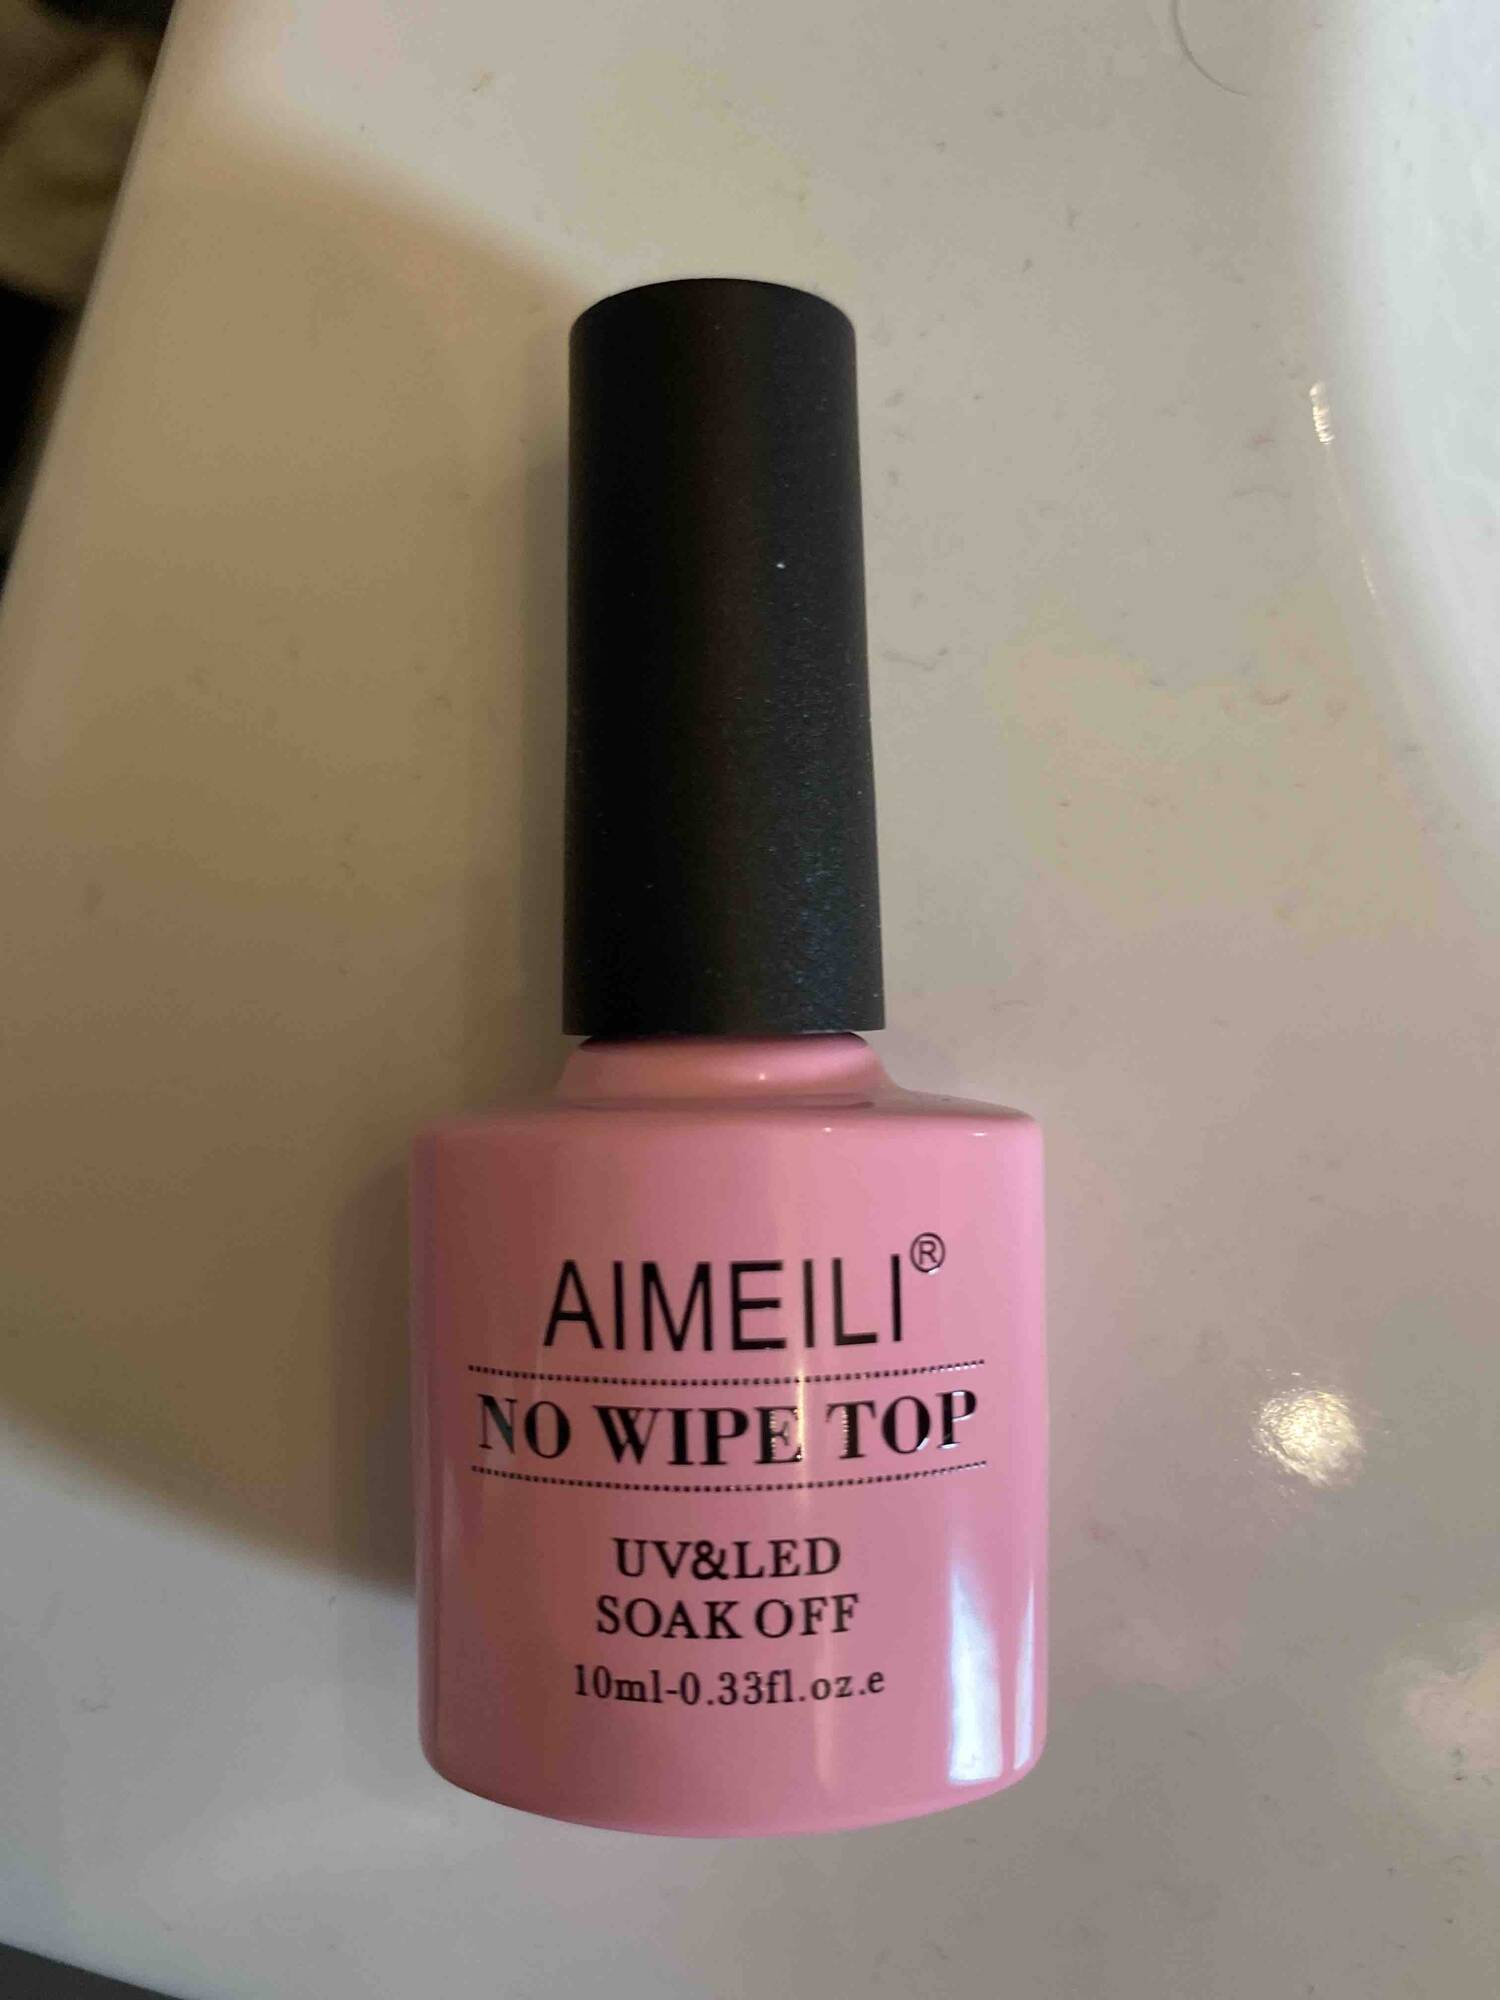 AIMEILI - No wipe top - Uv & led soak off